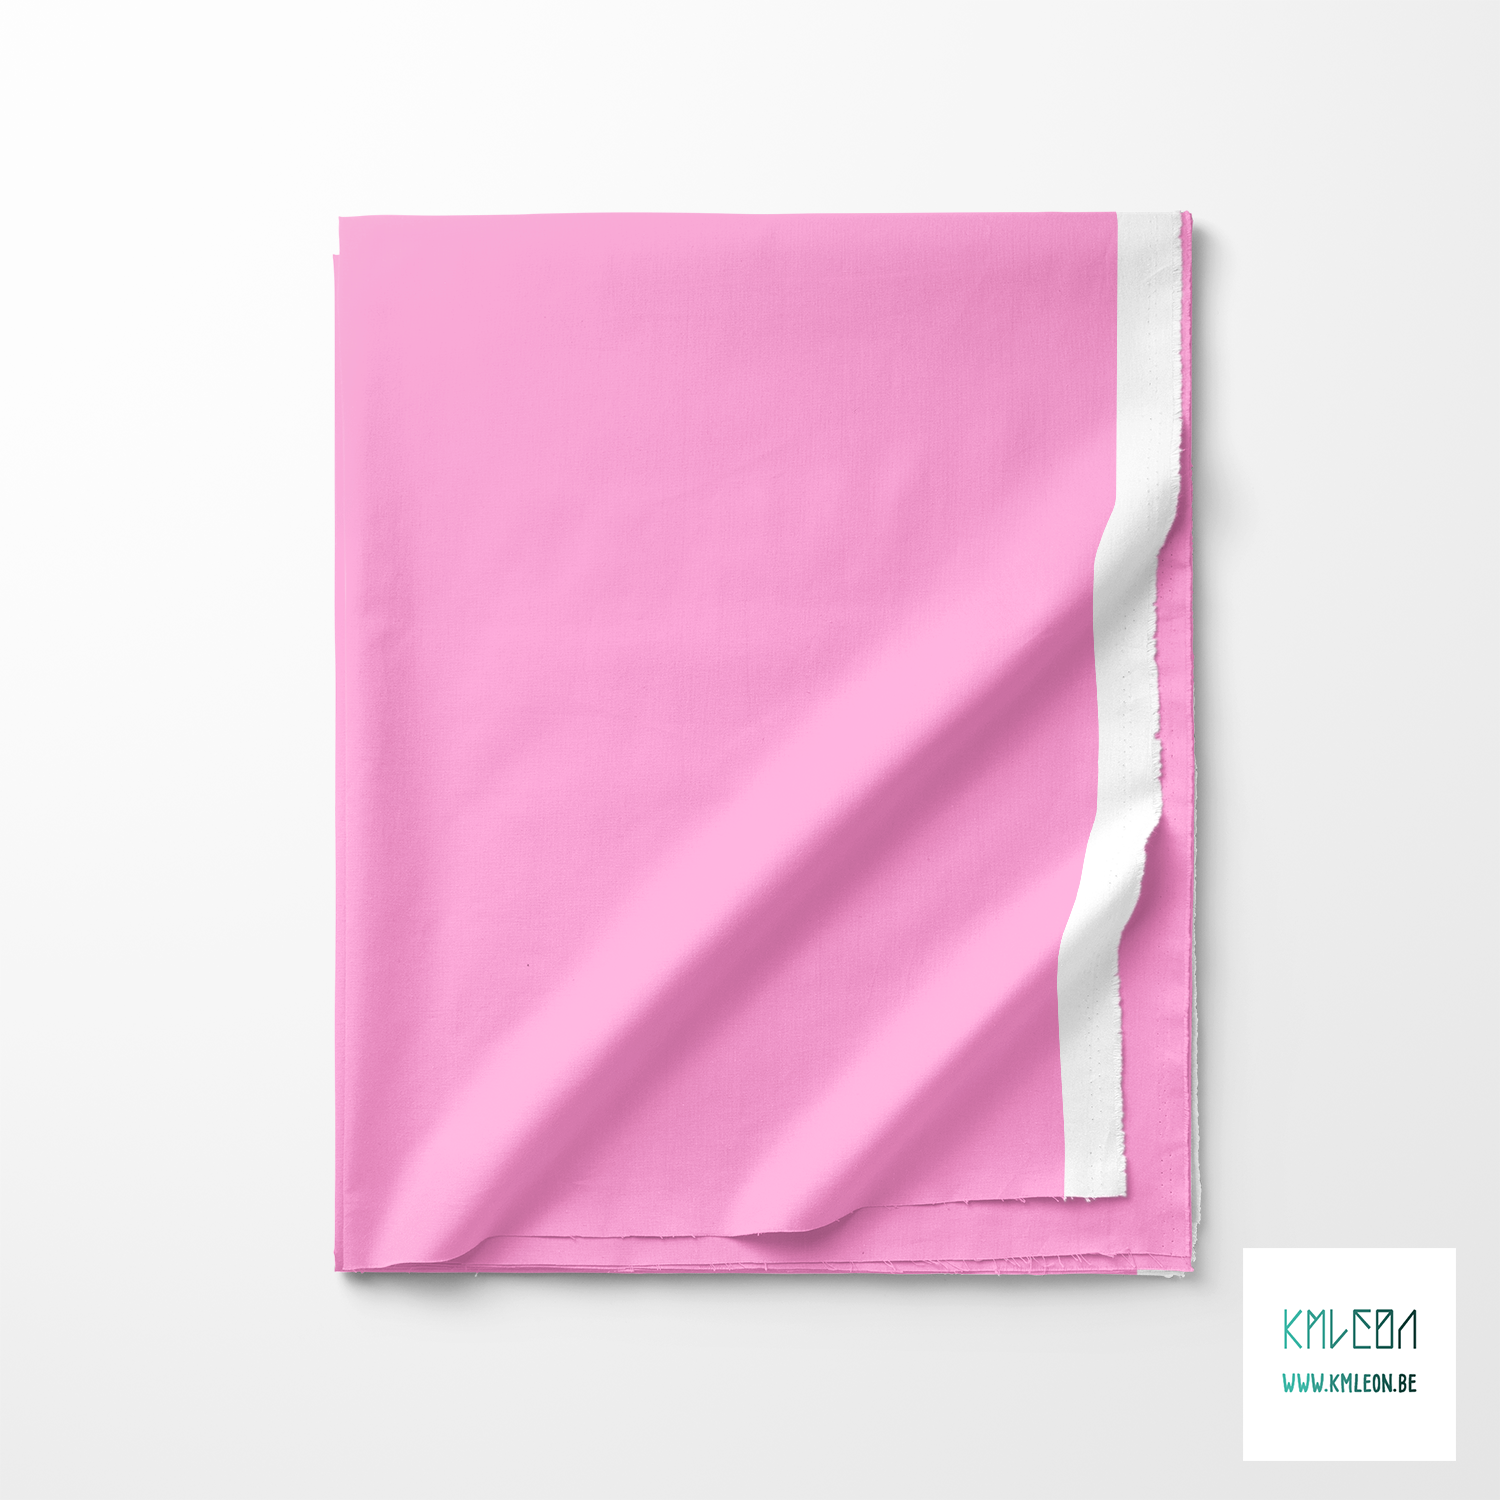 Solid bubblegum pink fabric